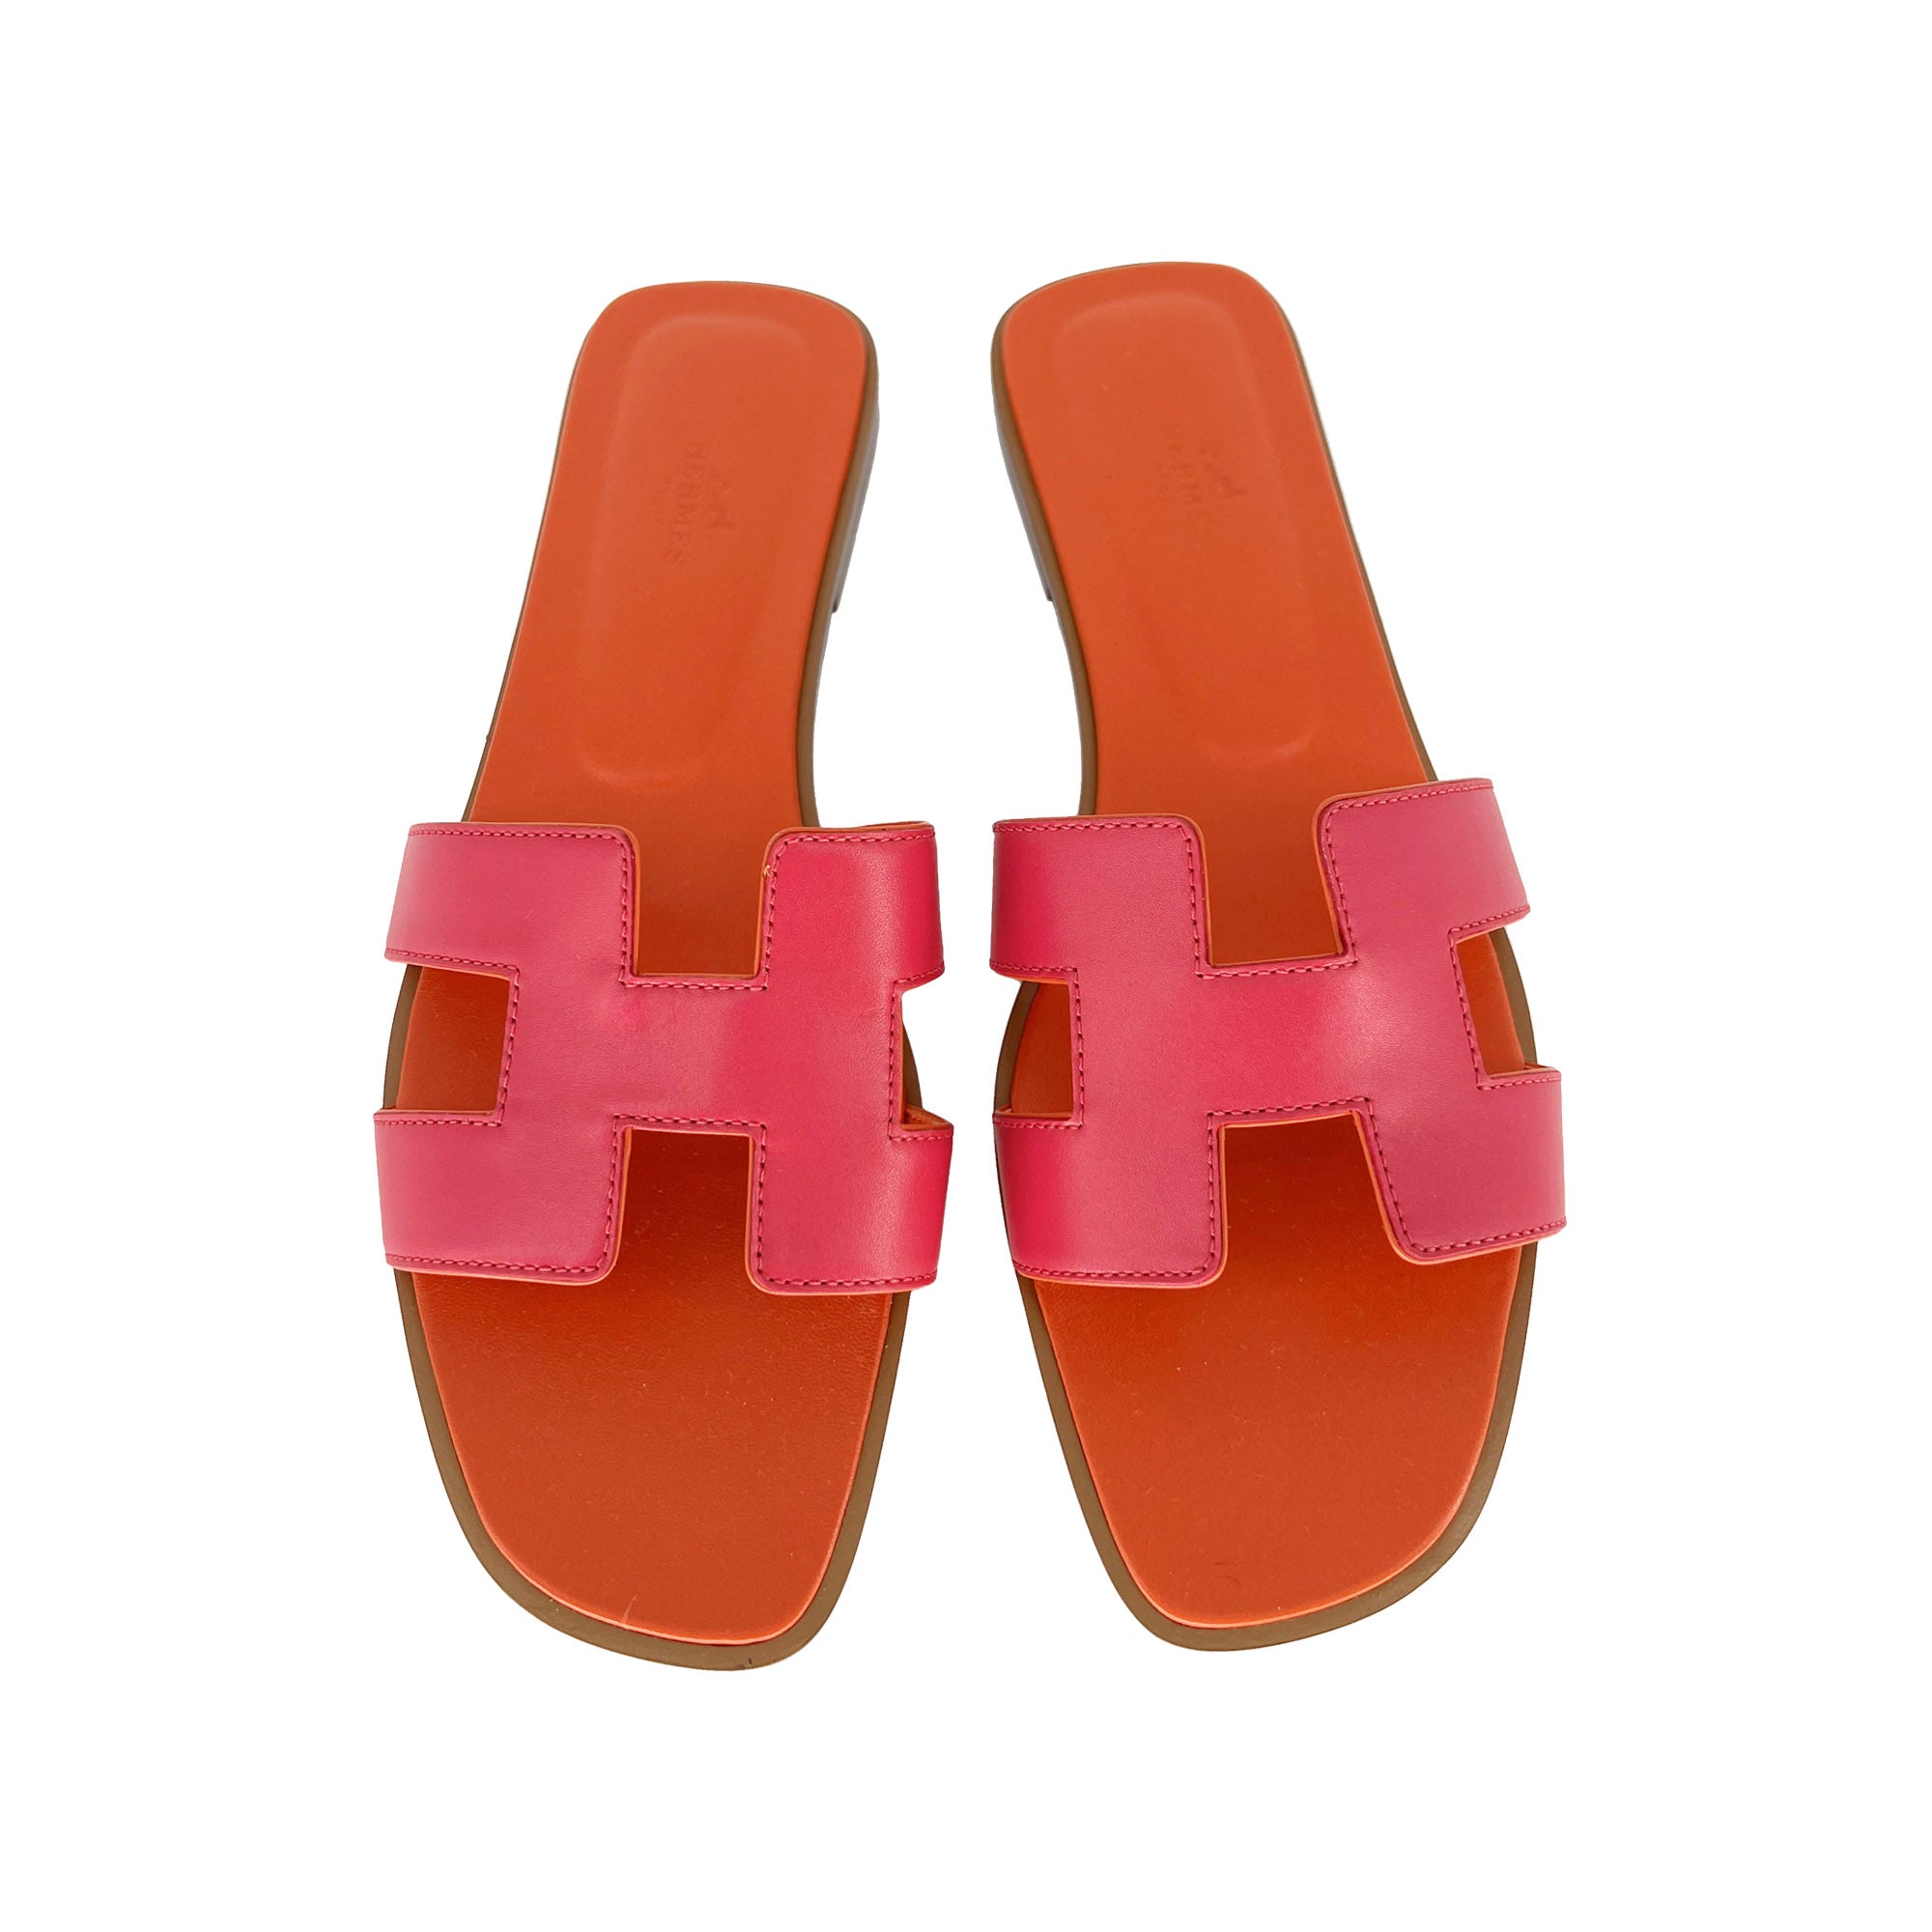 Hermes Oran Designer Slippers in Rose/Orange top